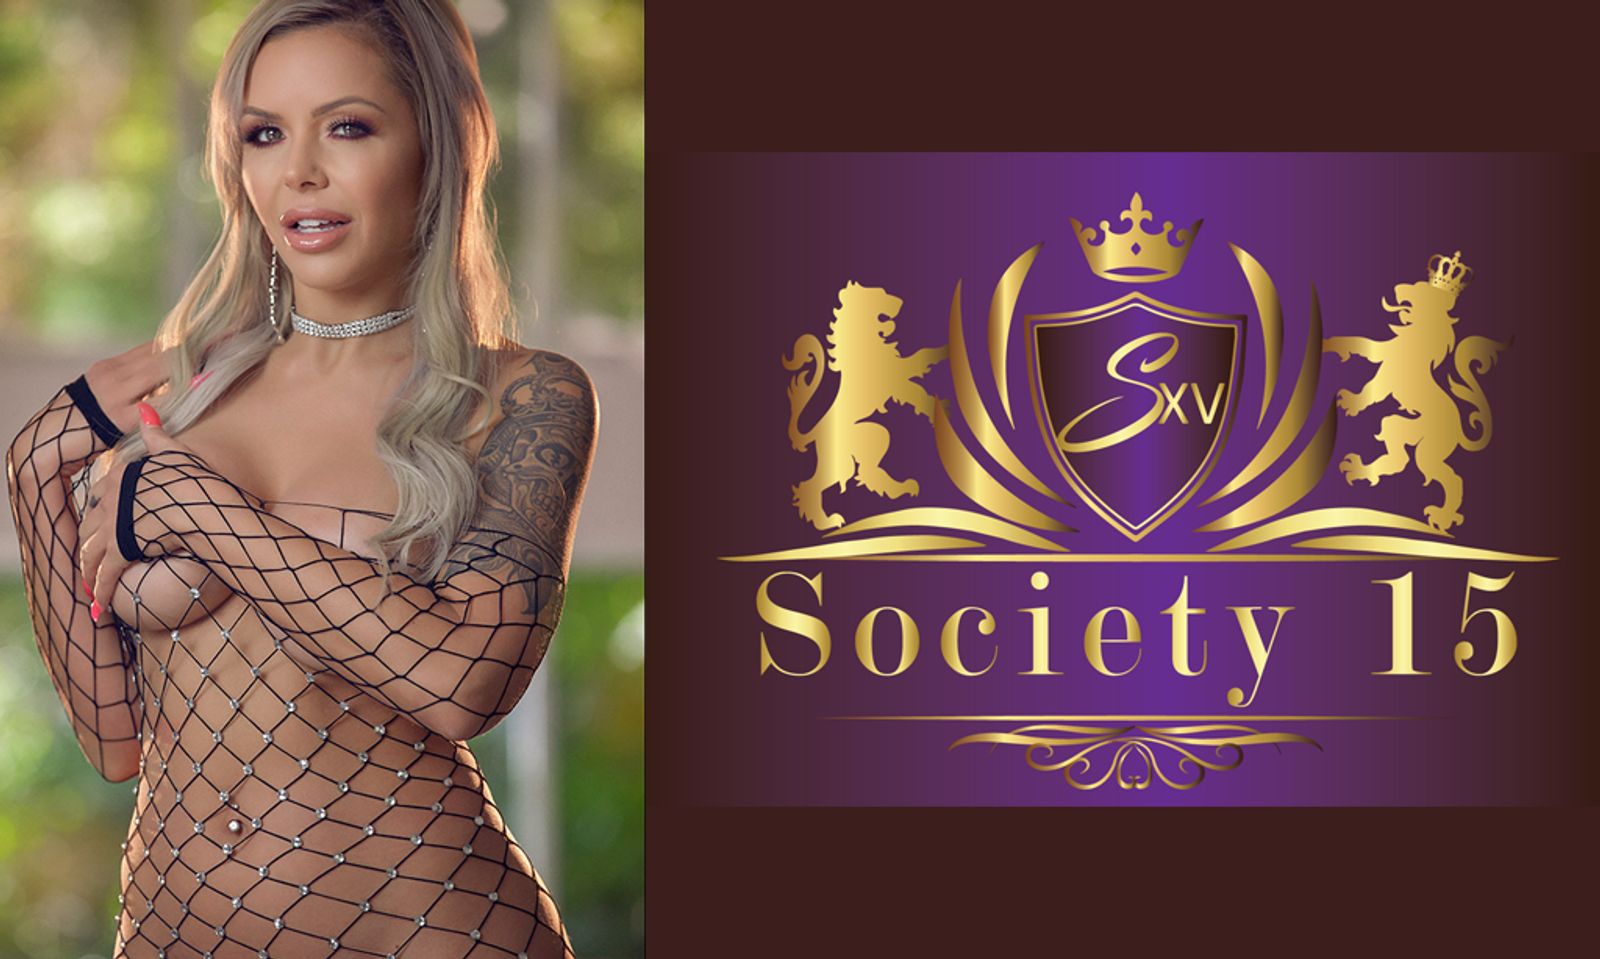 Society 15 Announces Nina Elle as New Owner